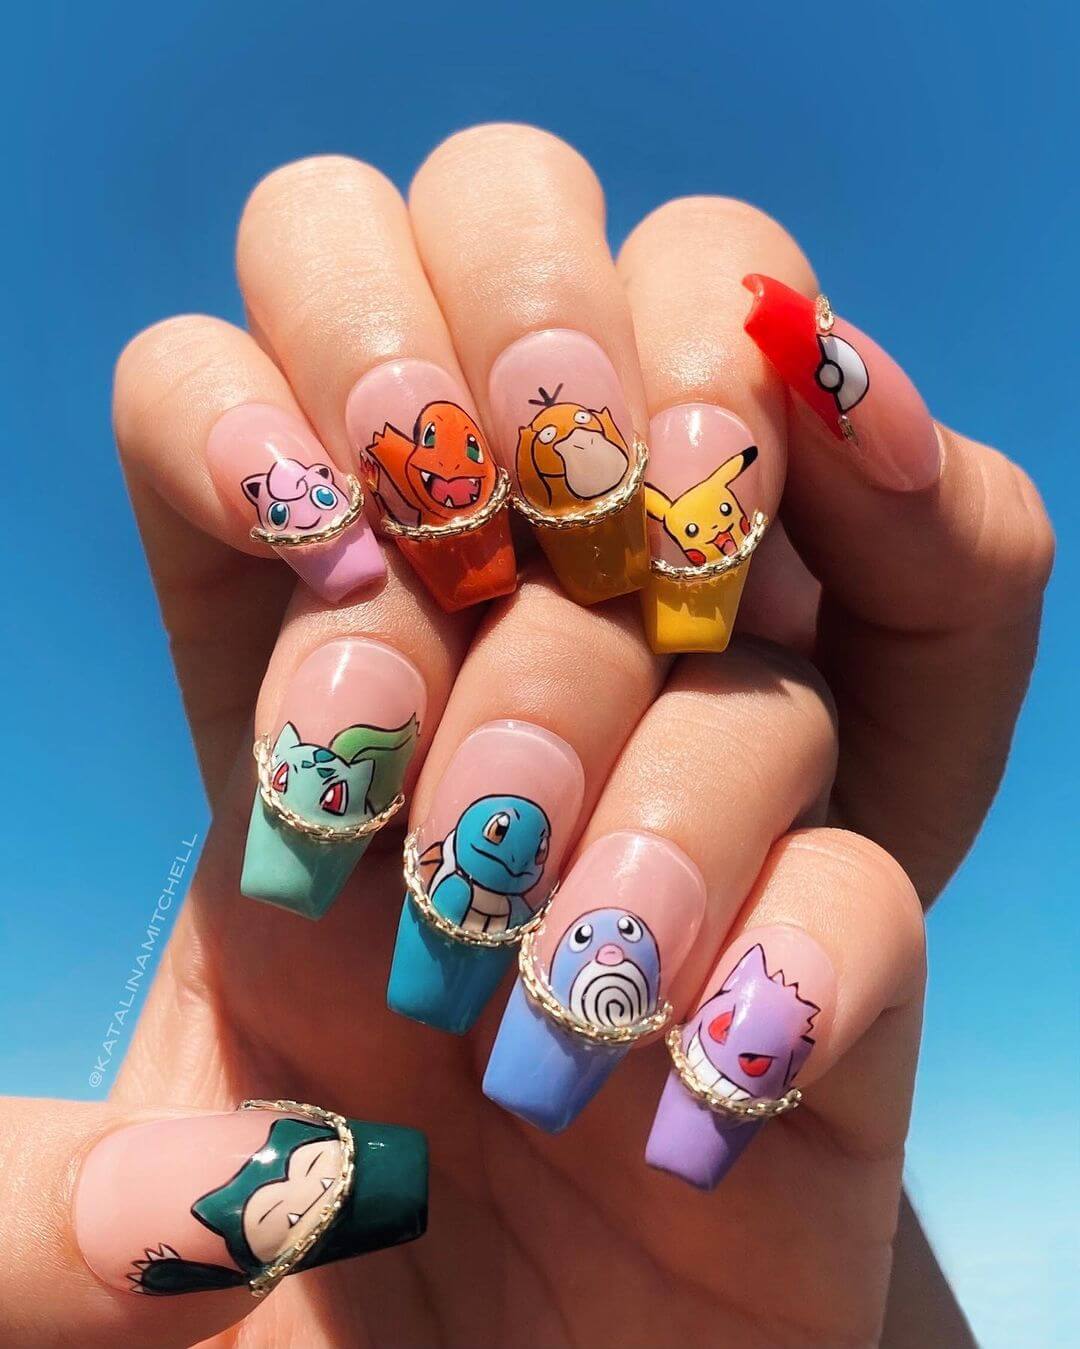 Pikachu And Pokemon Nail Art Designs